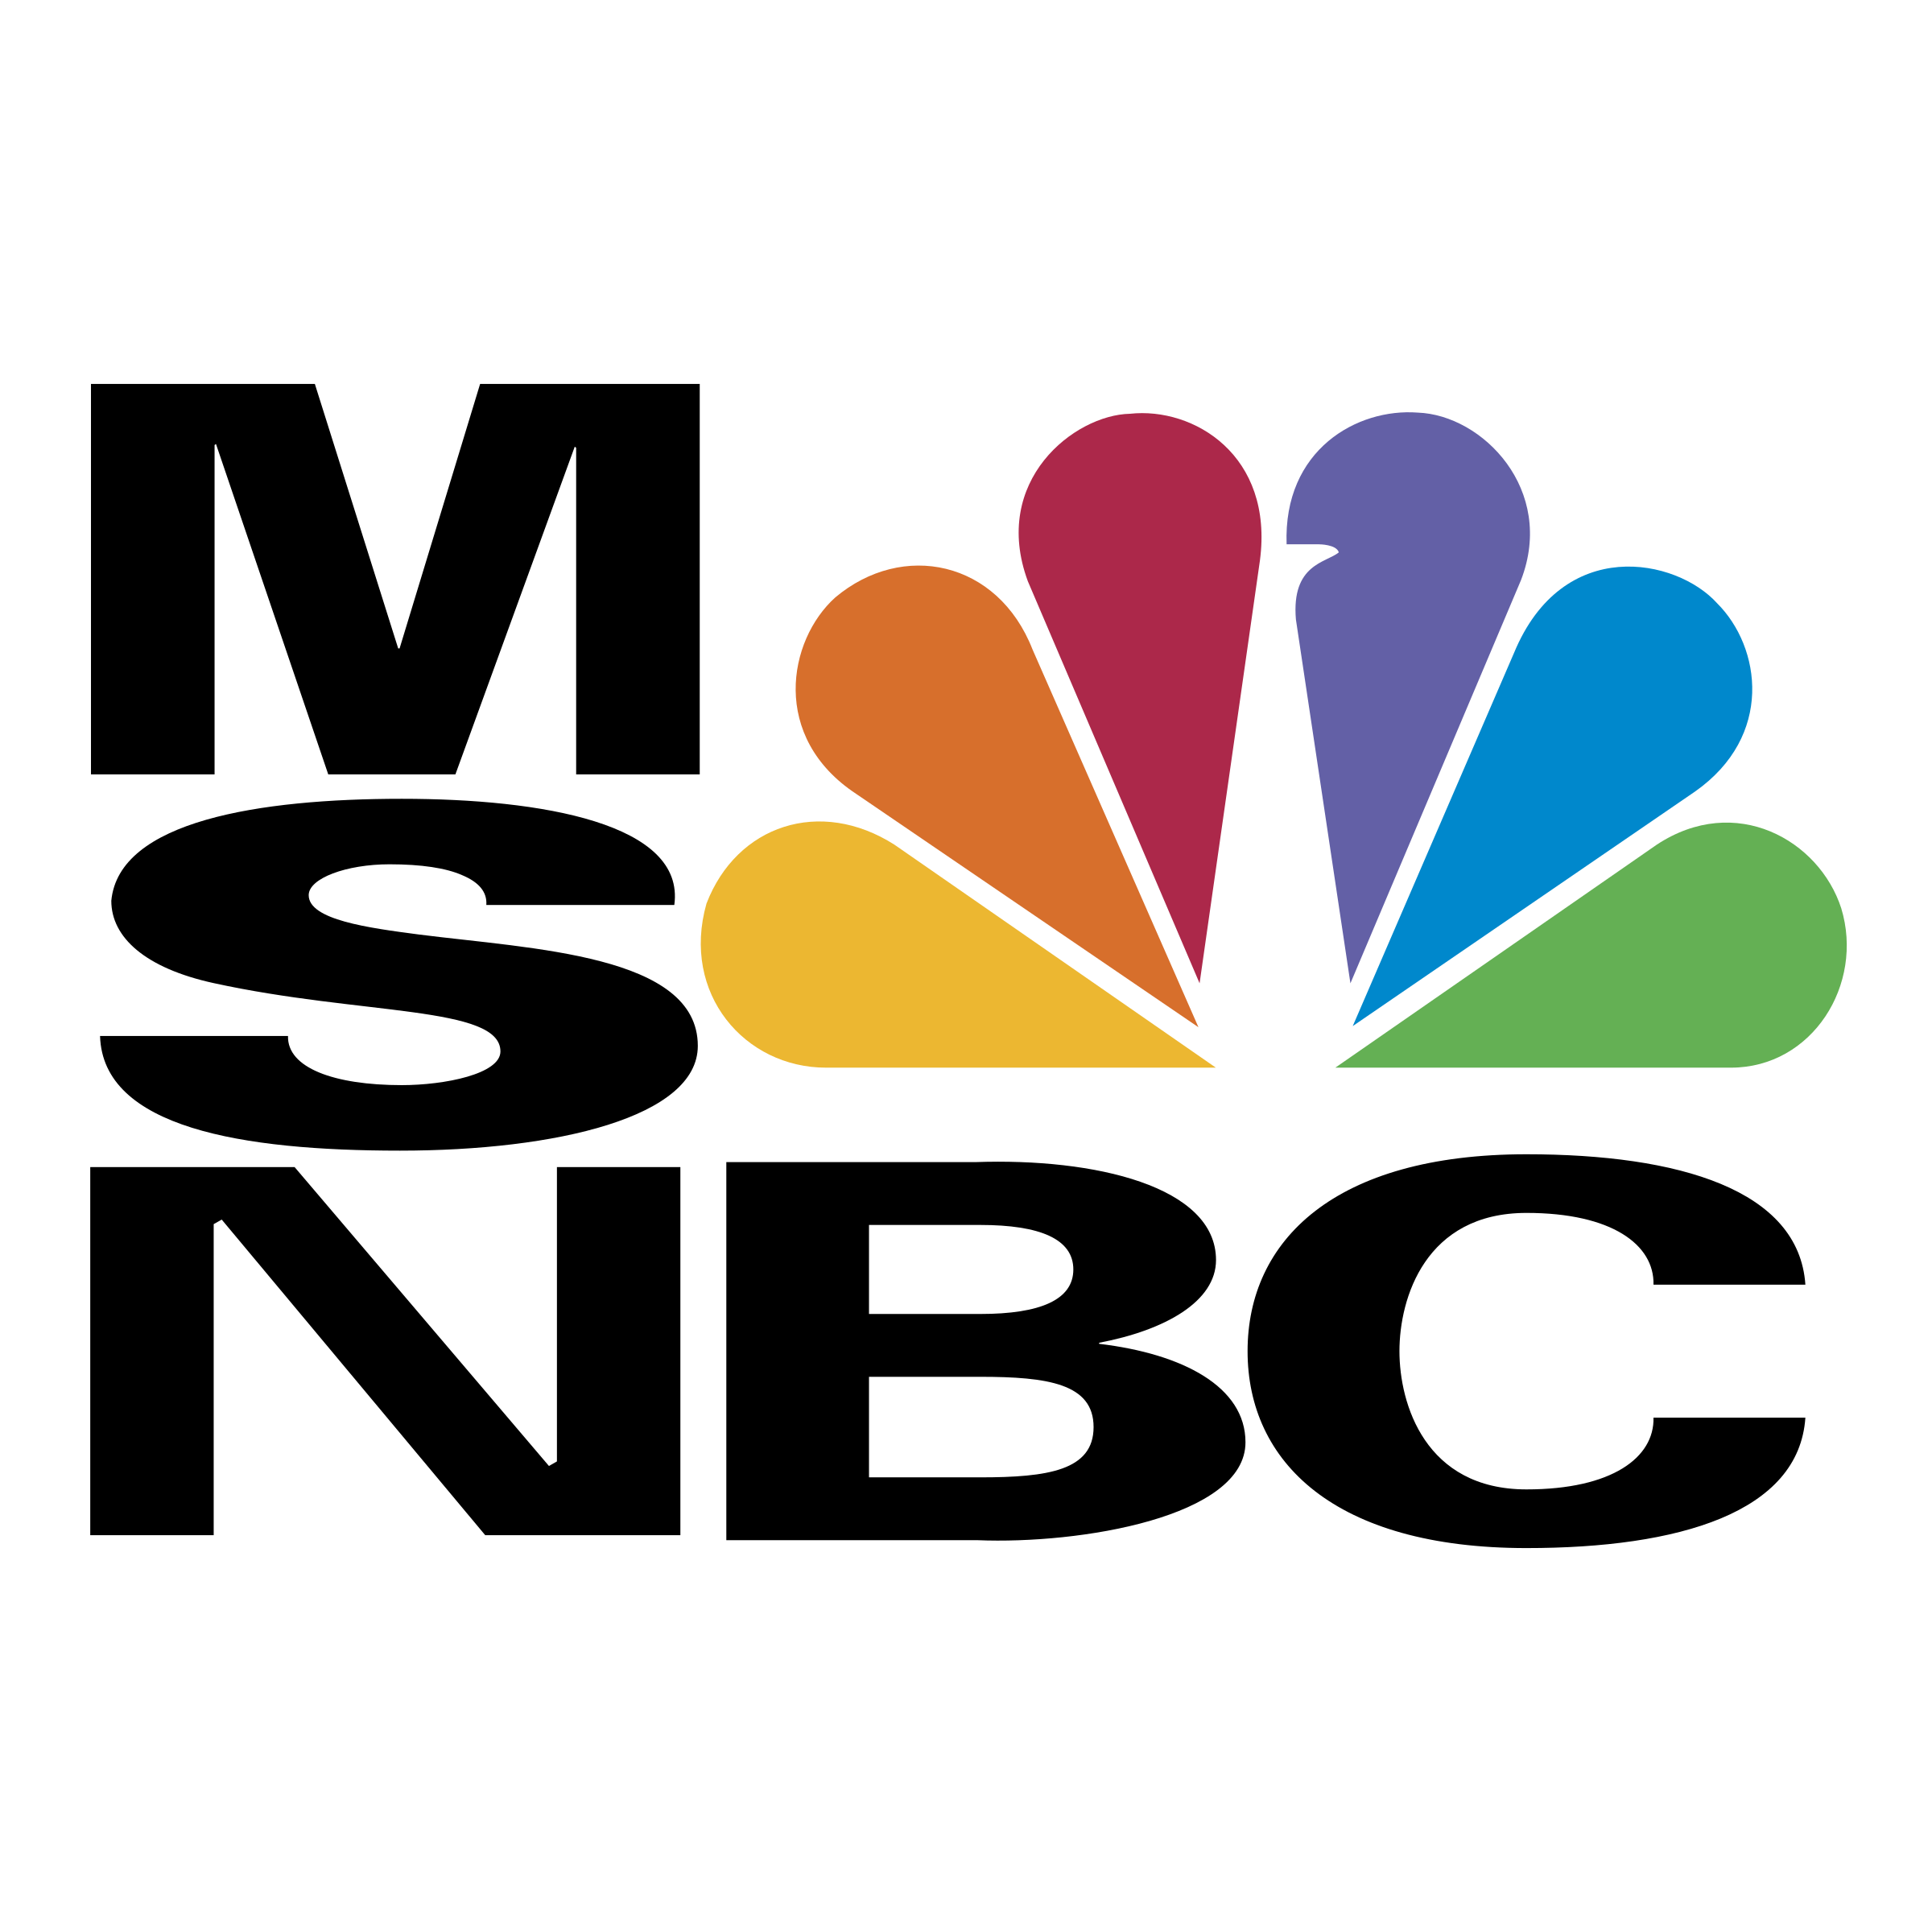 msnbc-logo-png-transparent.png